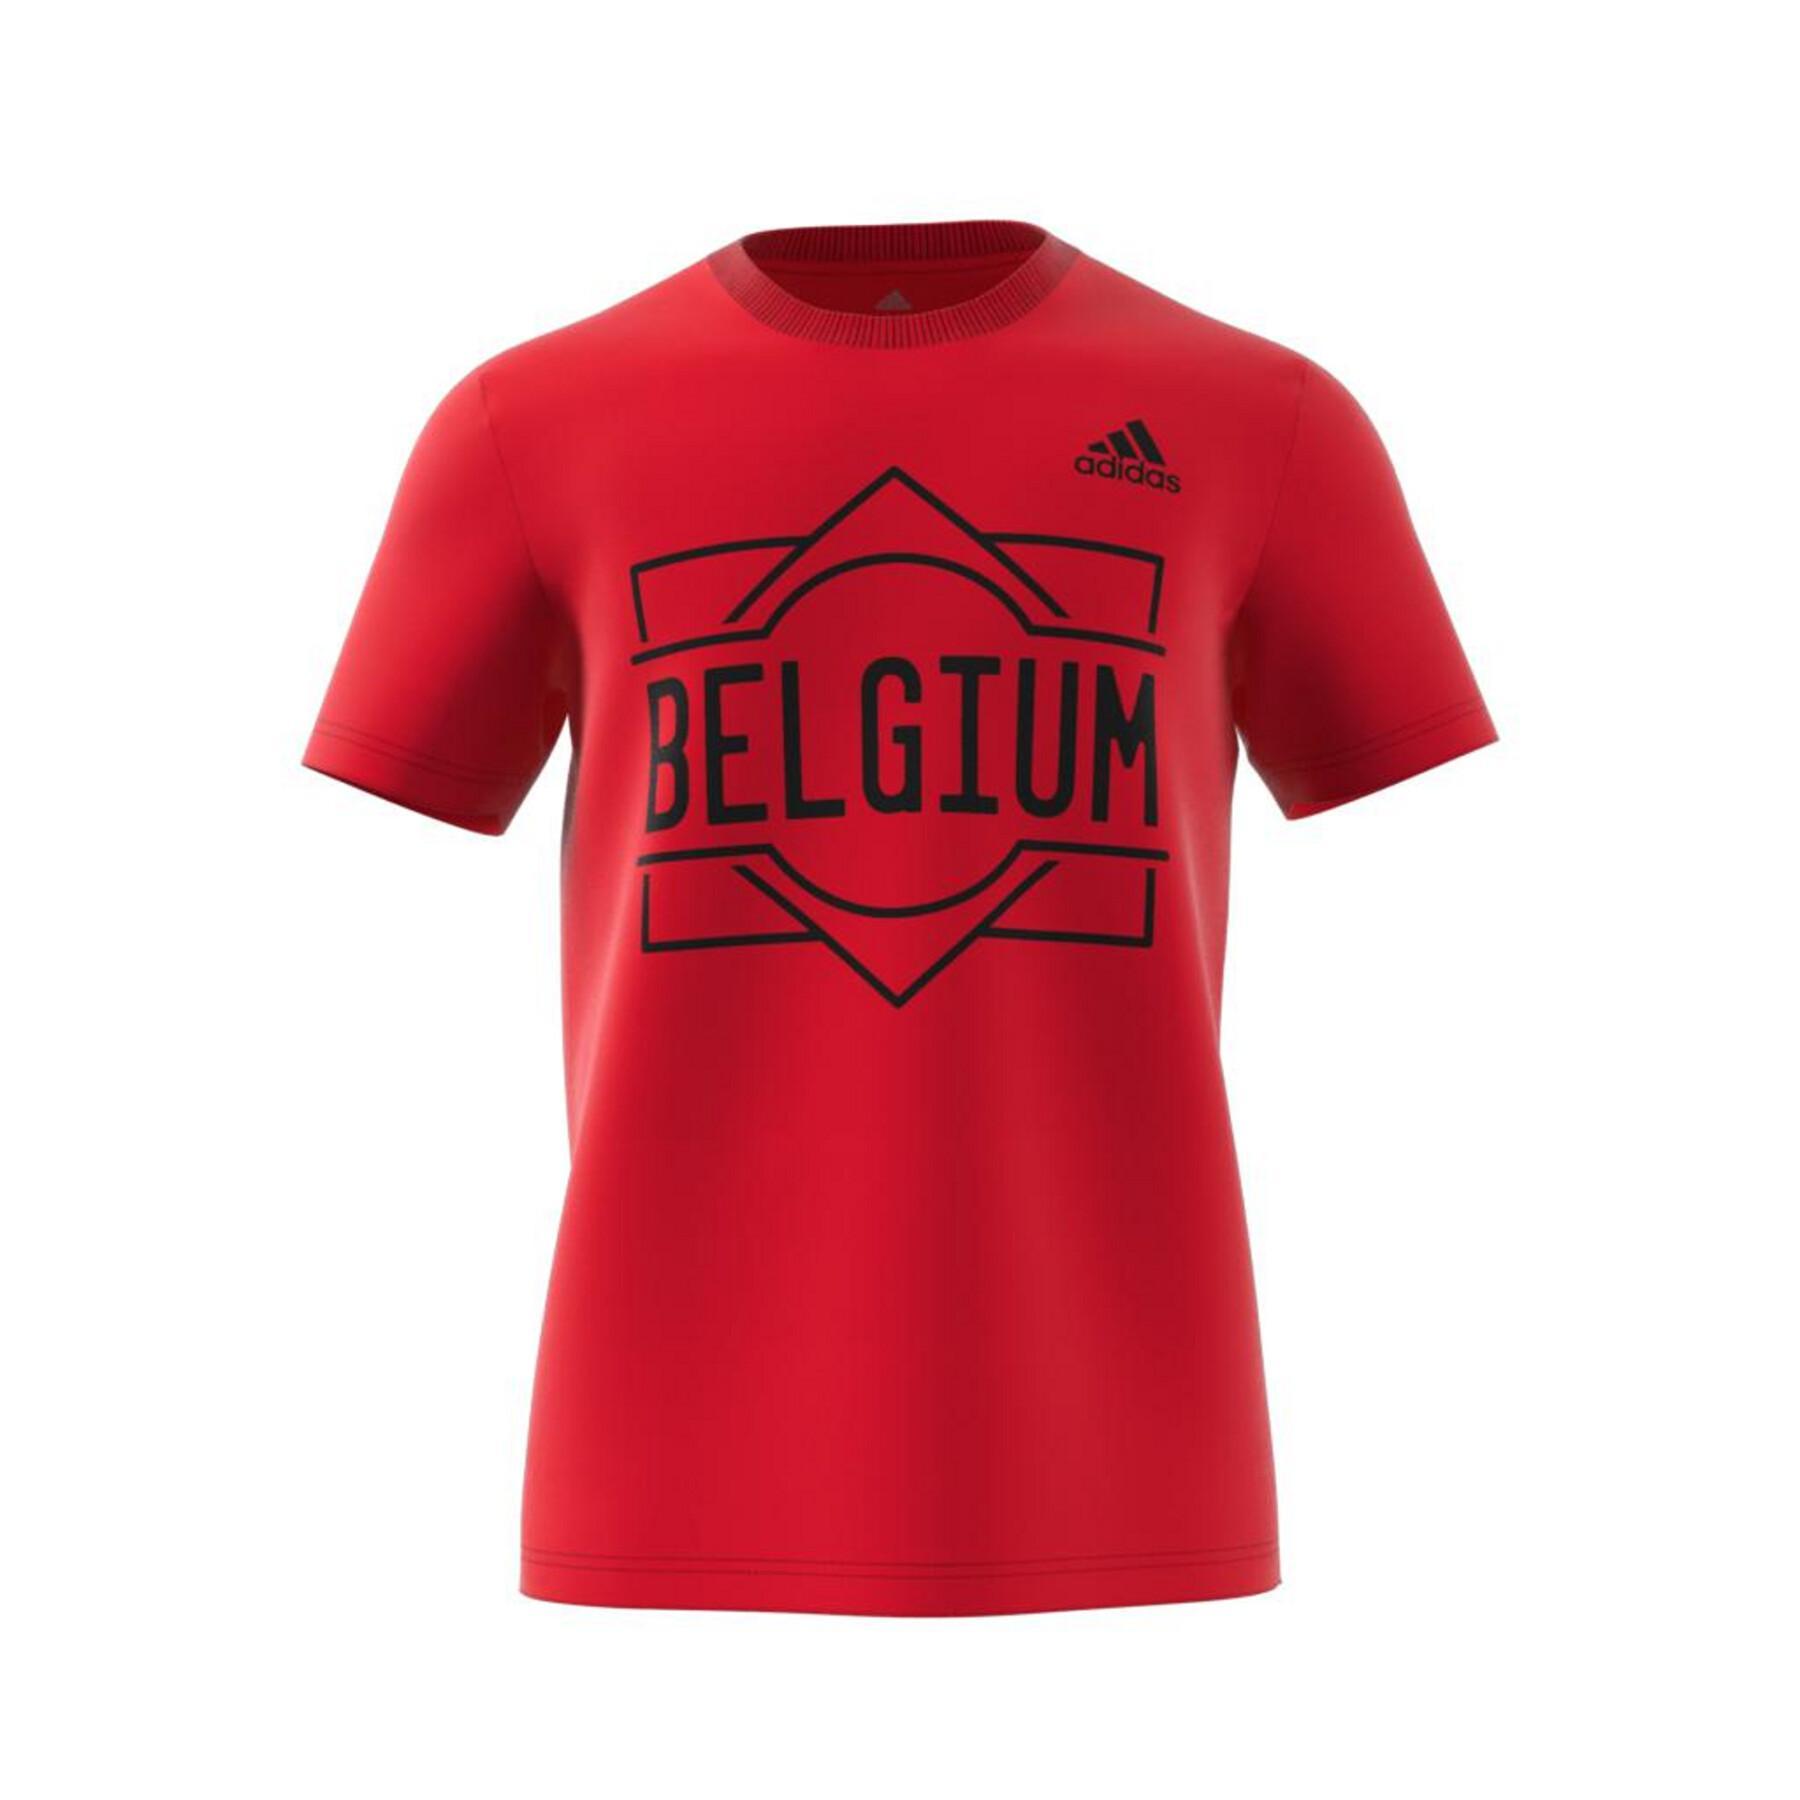 Koszulka Belgique Culturwear 2020